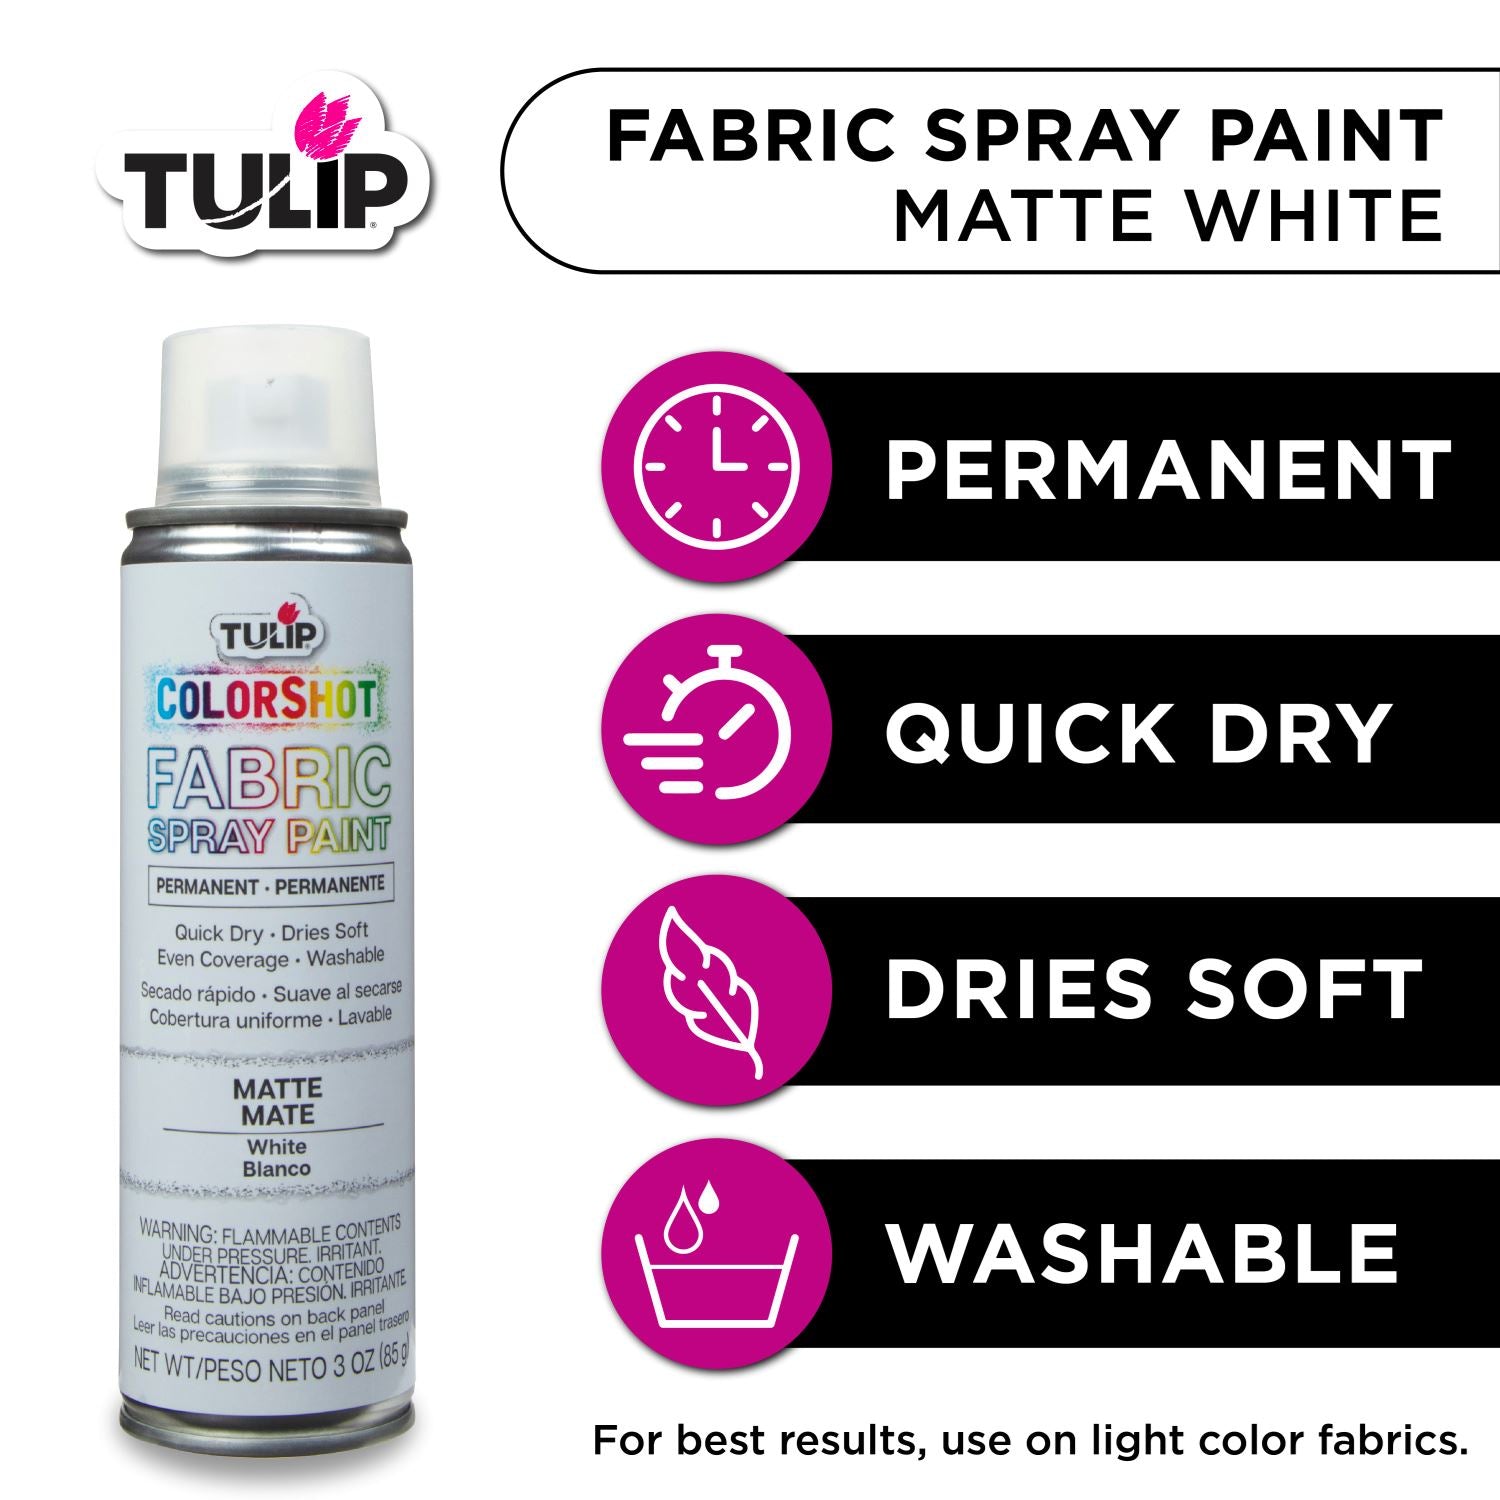 Tulip Color Shot Instant Fabric Color Spray, 3 oz - White